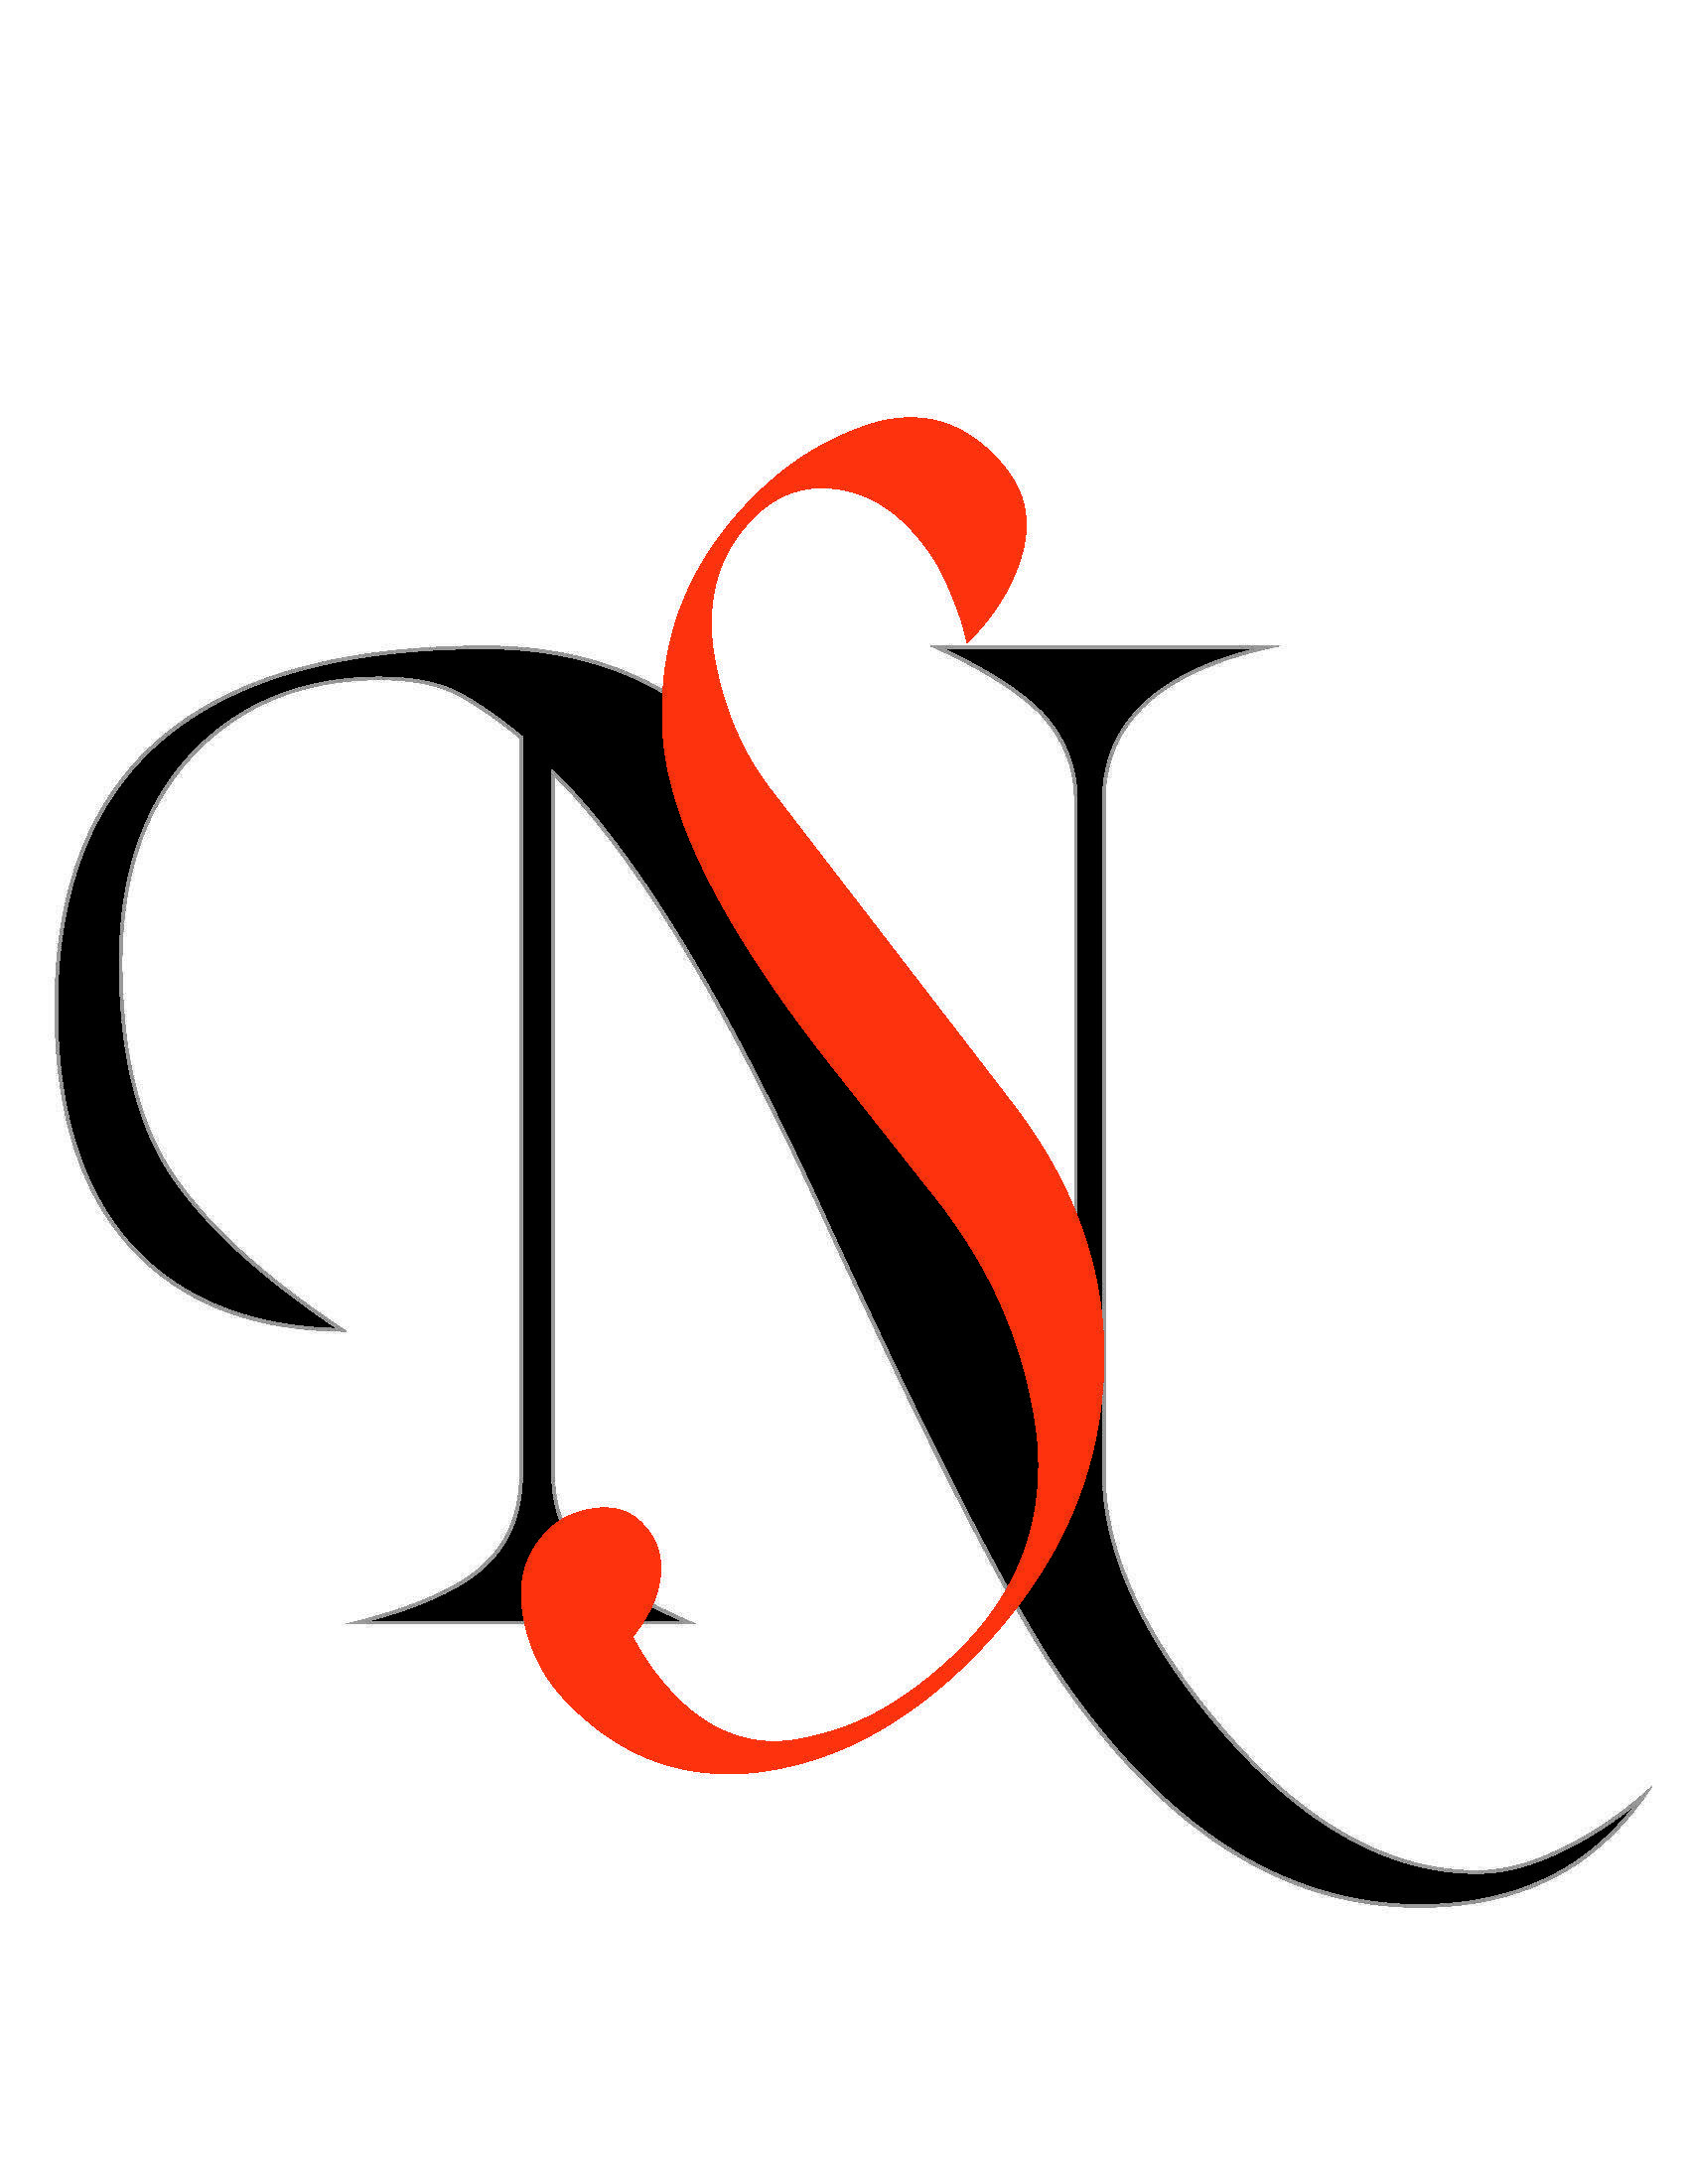 NS Logo - monogram sn - Google Search | cricut | Initials logo, Ns logo ...